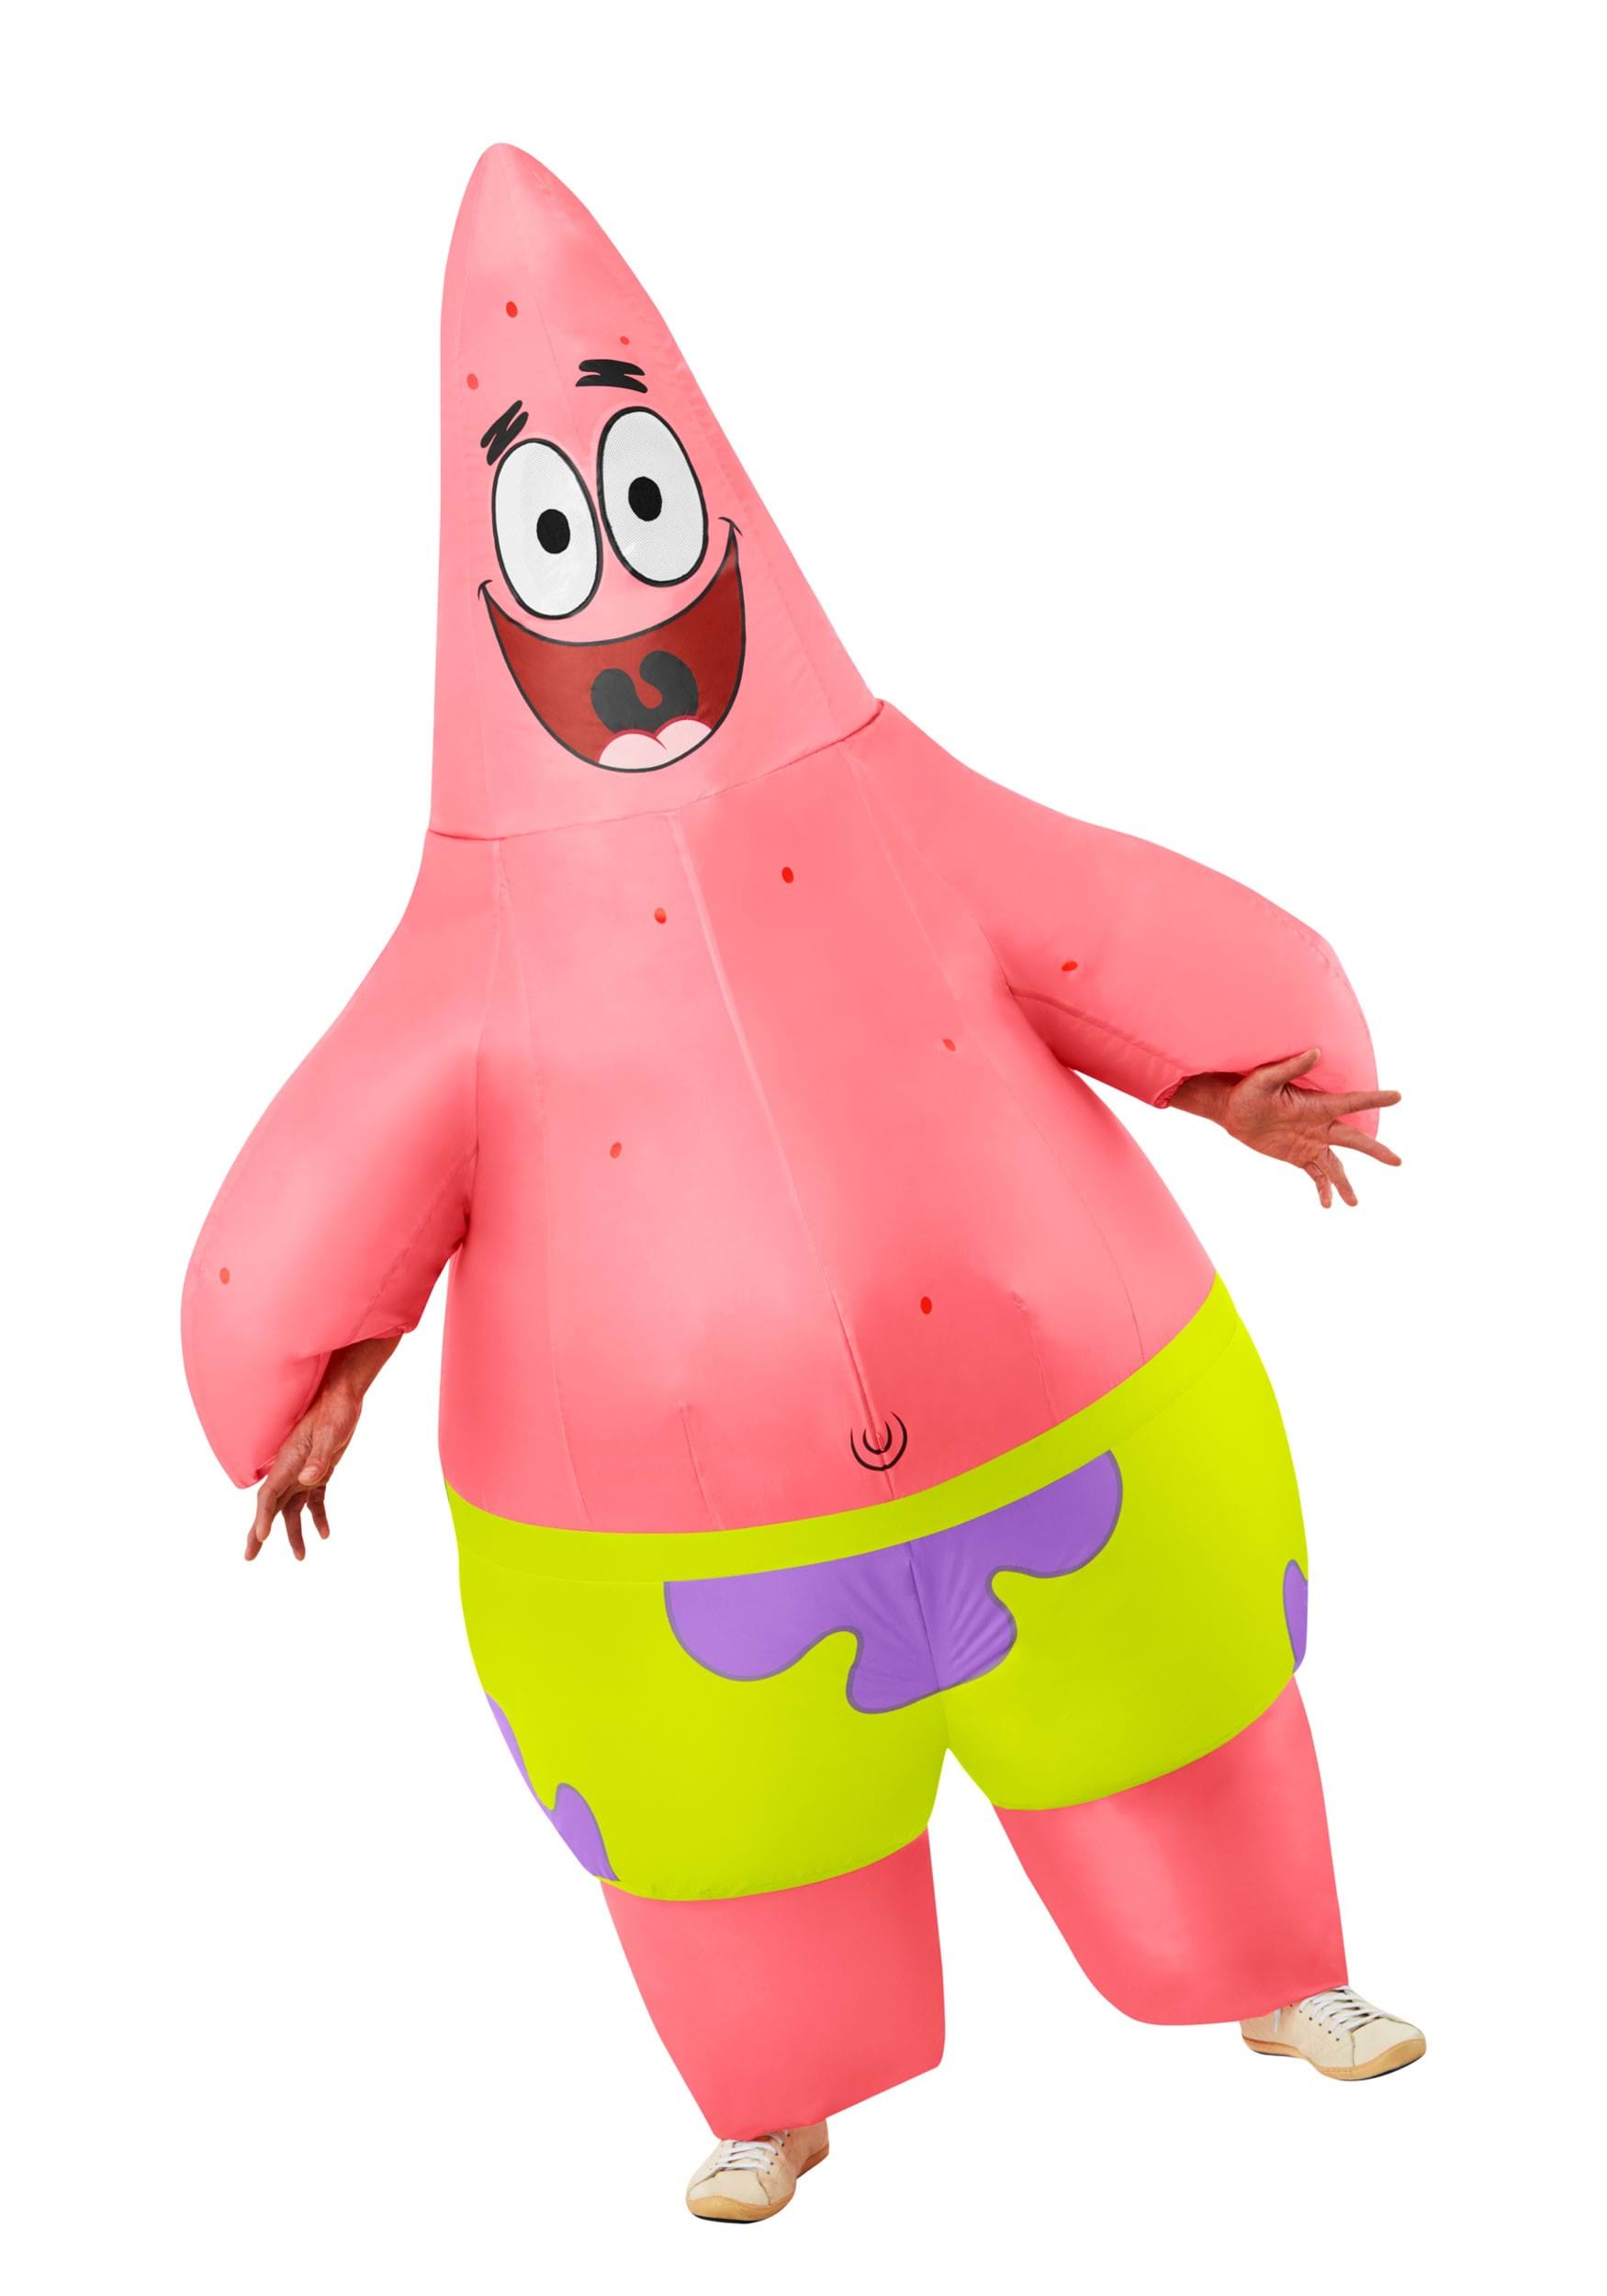 spongebob patrick and squidward costumes